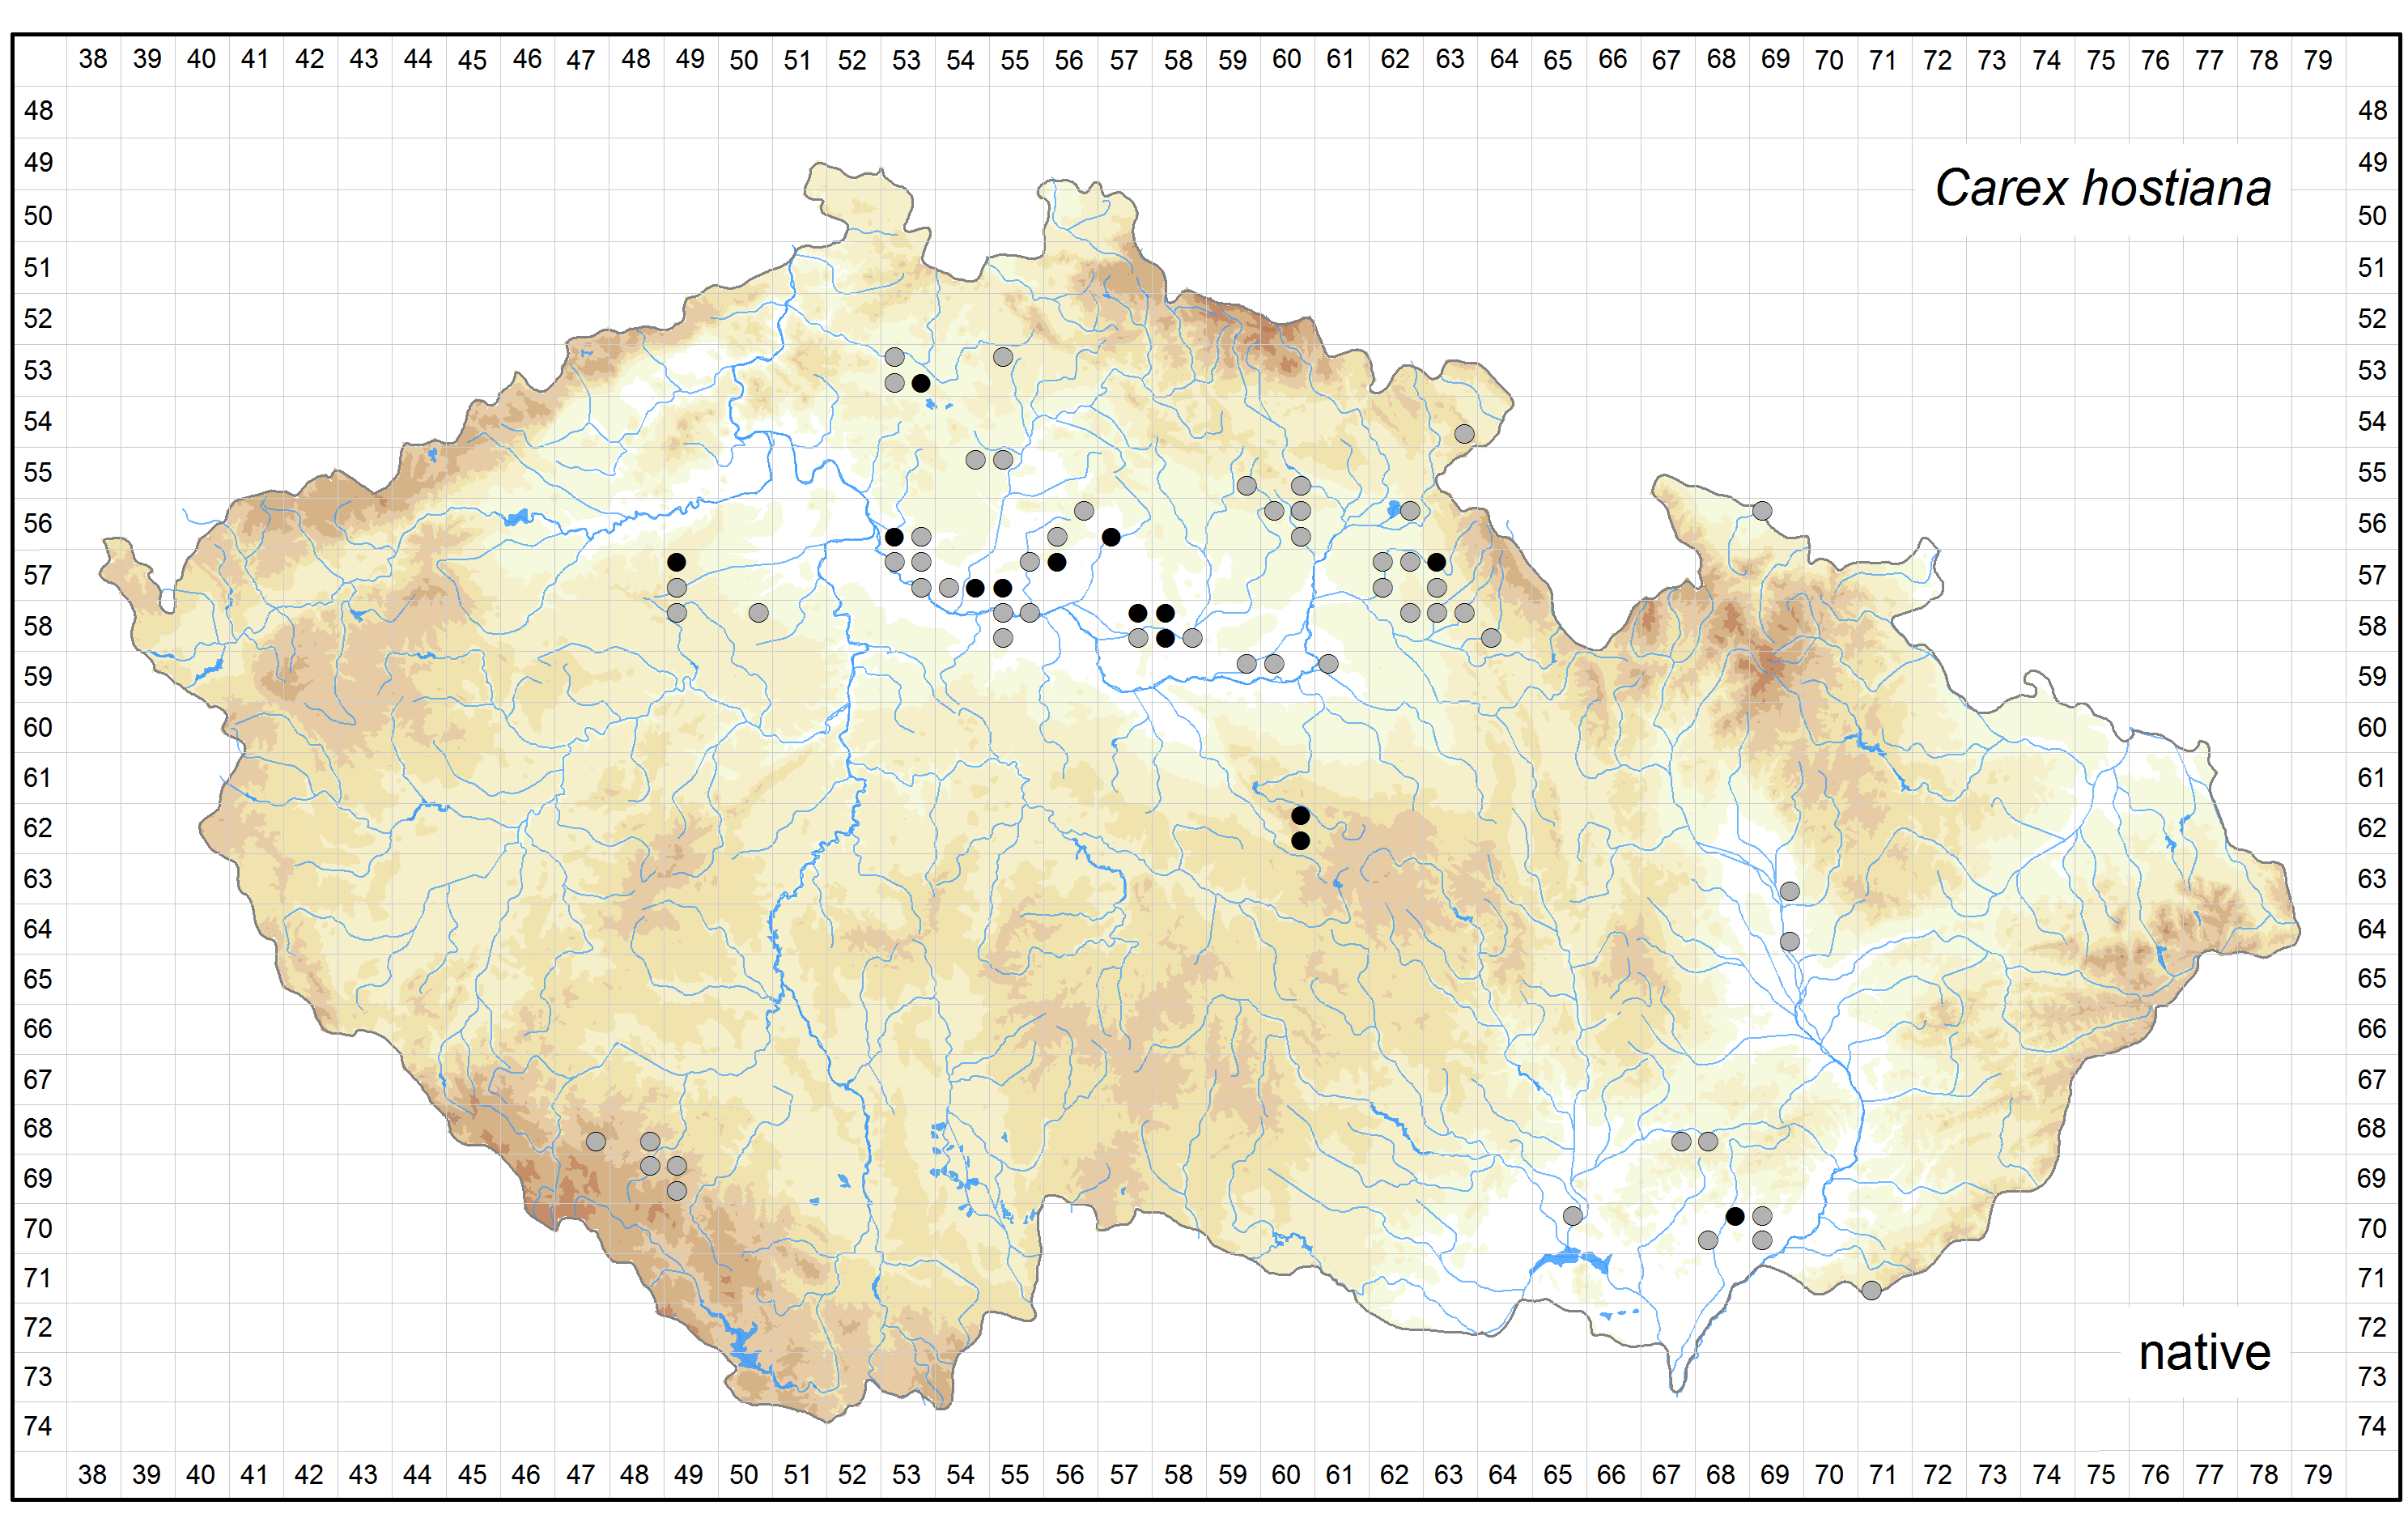 Distribution of Carex hostiana in the Czech Republic Author of the map: Jitka Štěpánková Map produced on: 18-11-2015 Database records used for producing the distribution map of Carex hostiana